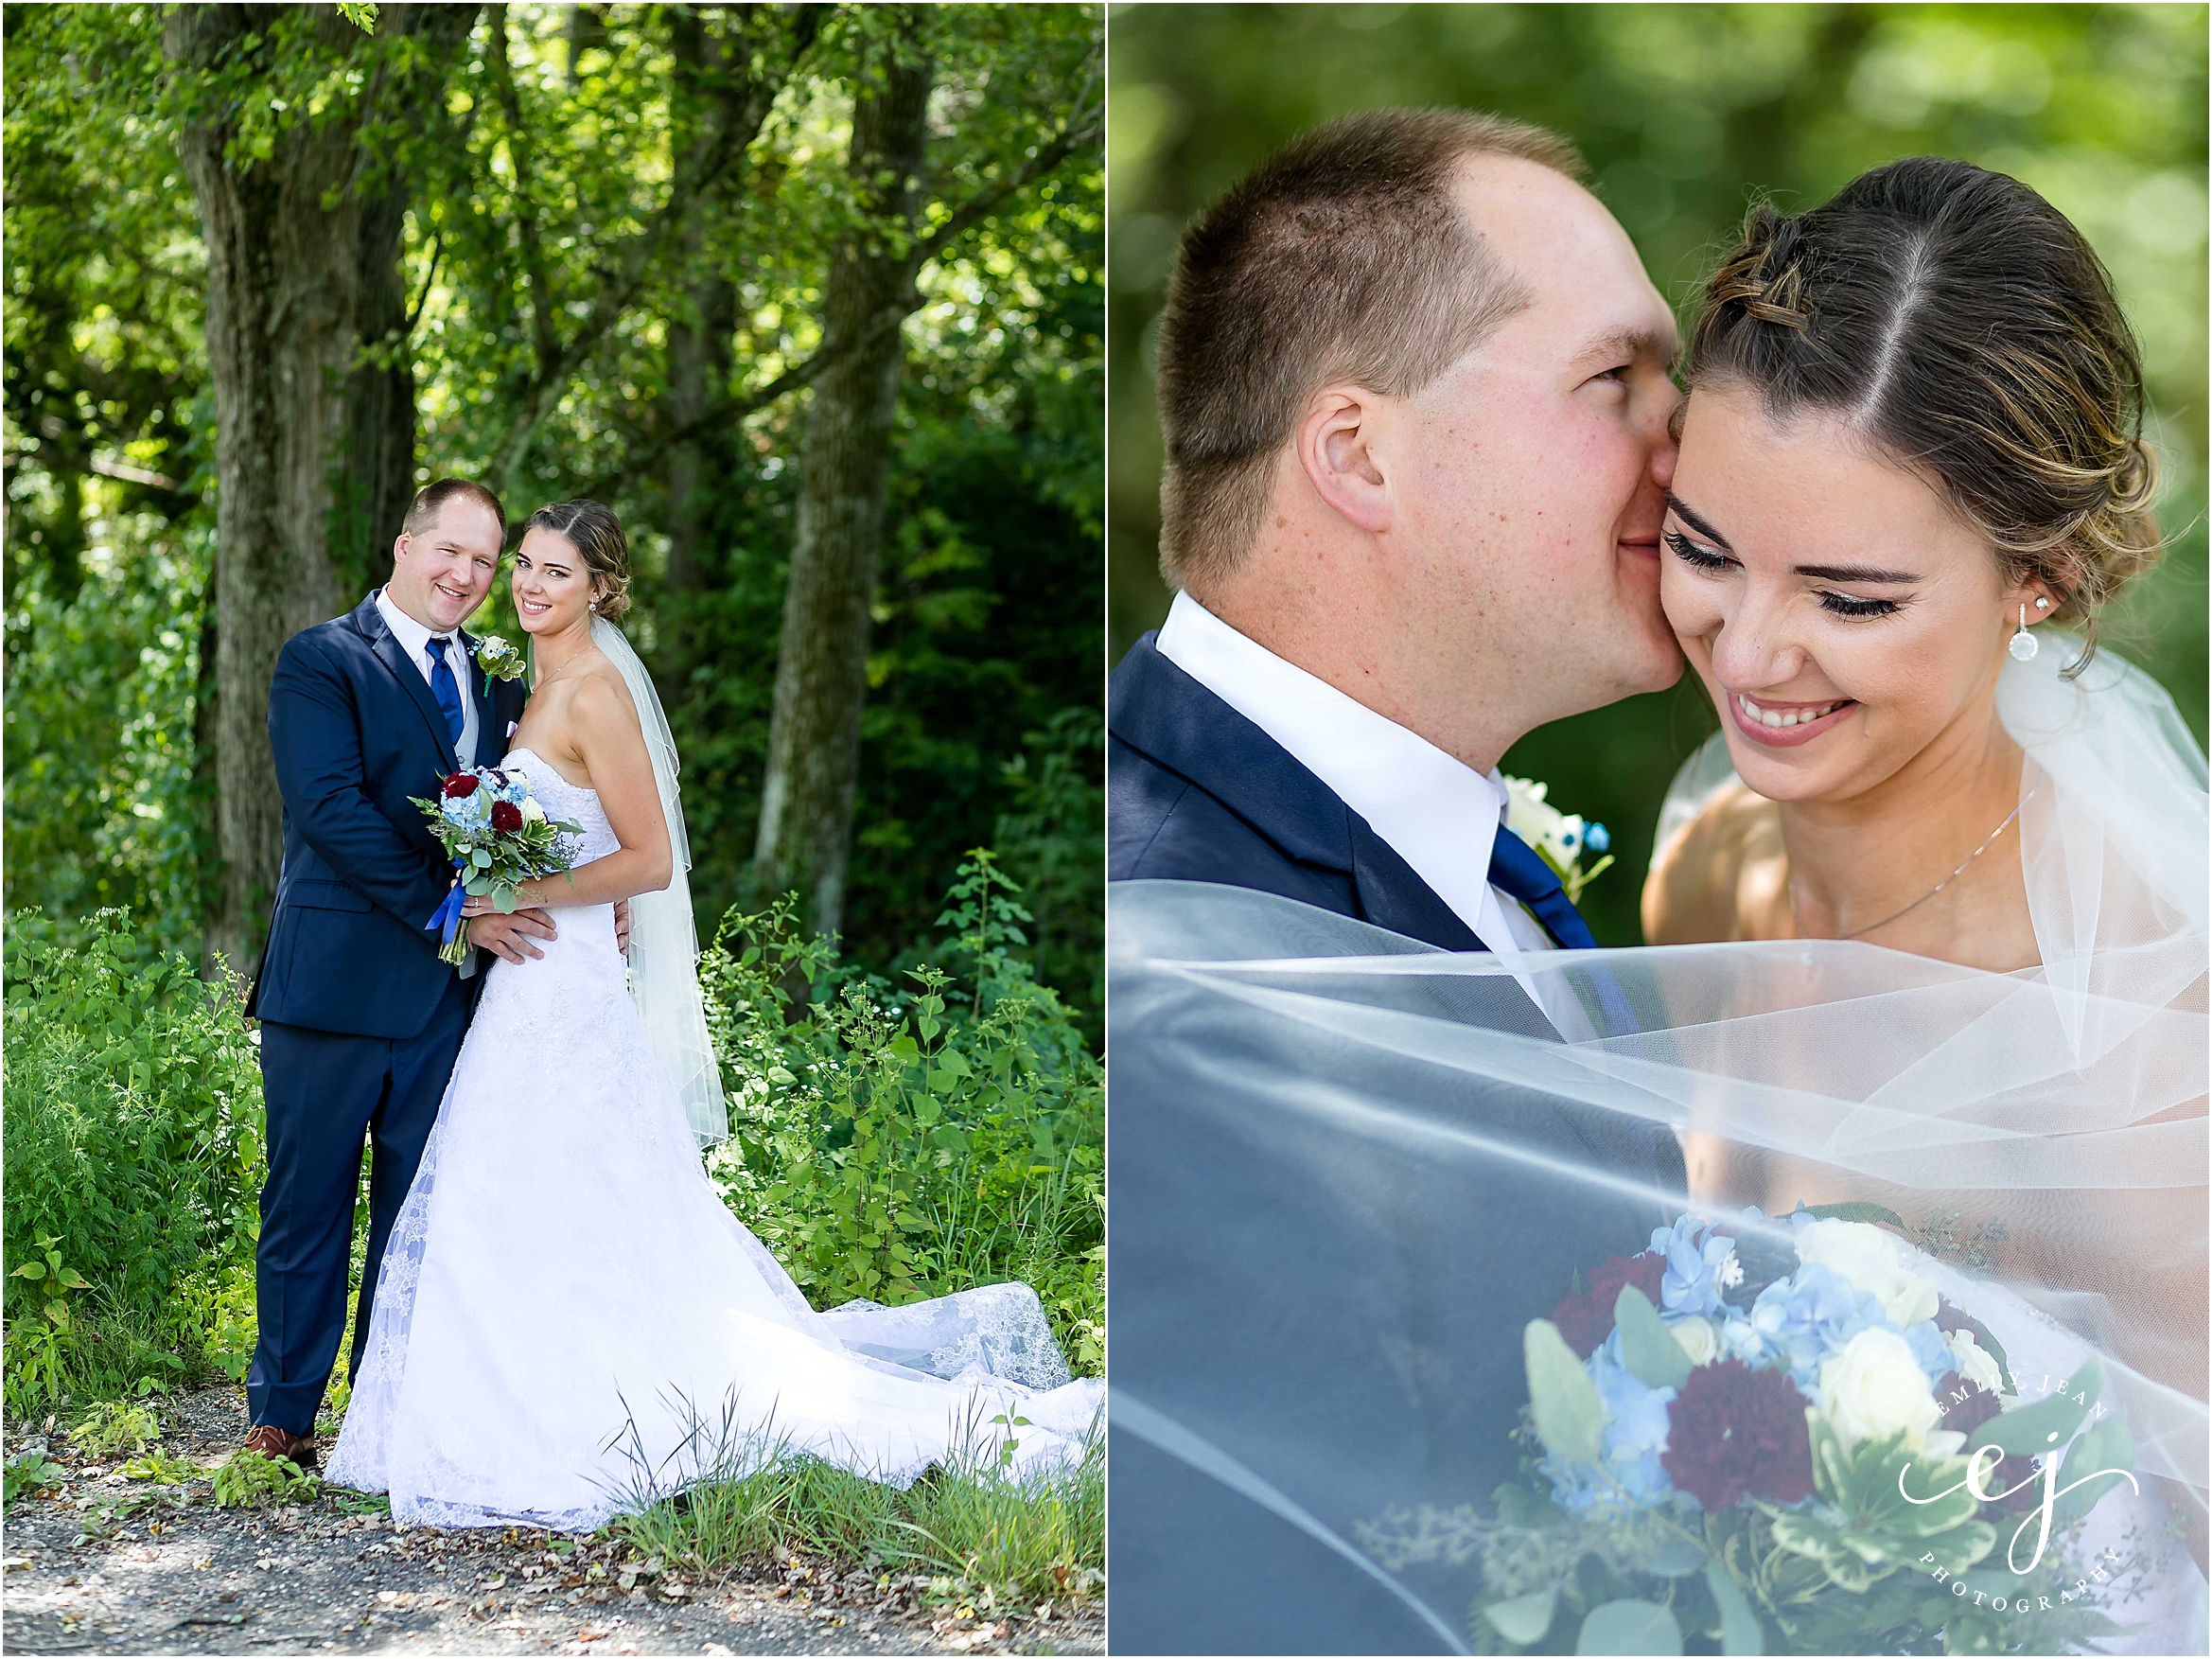 bride groom outdoors outside forest summer wedding navy suit wisconsin la crosse photographer